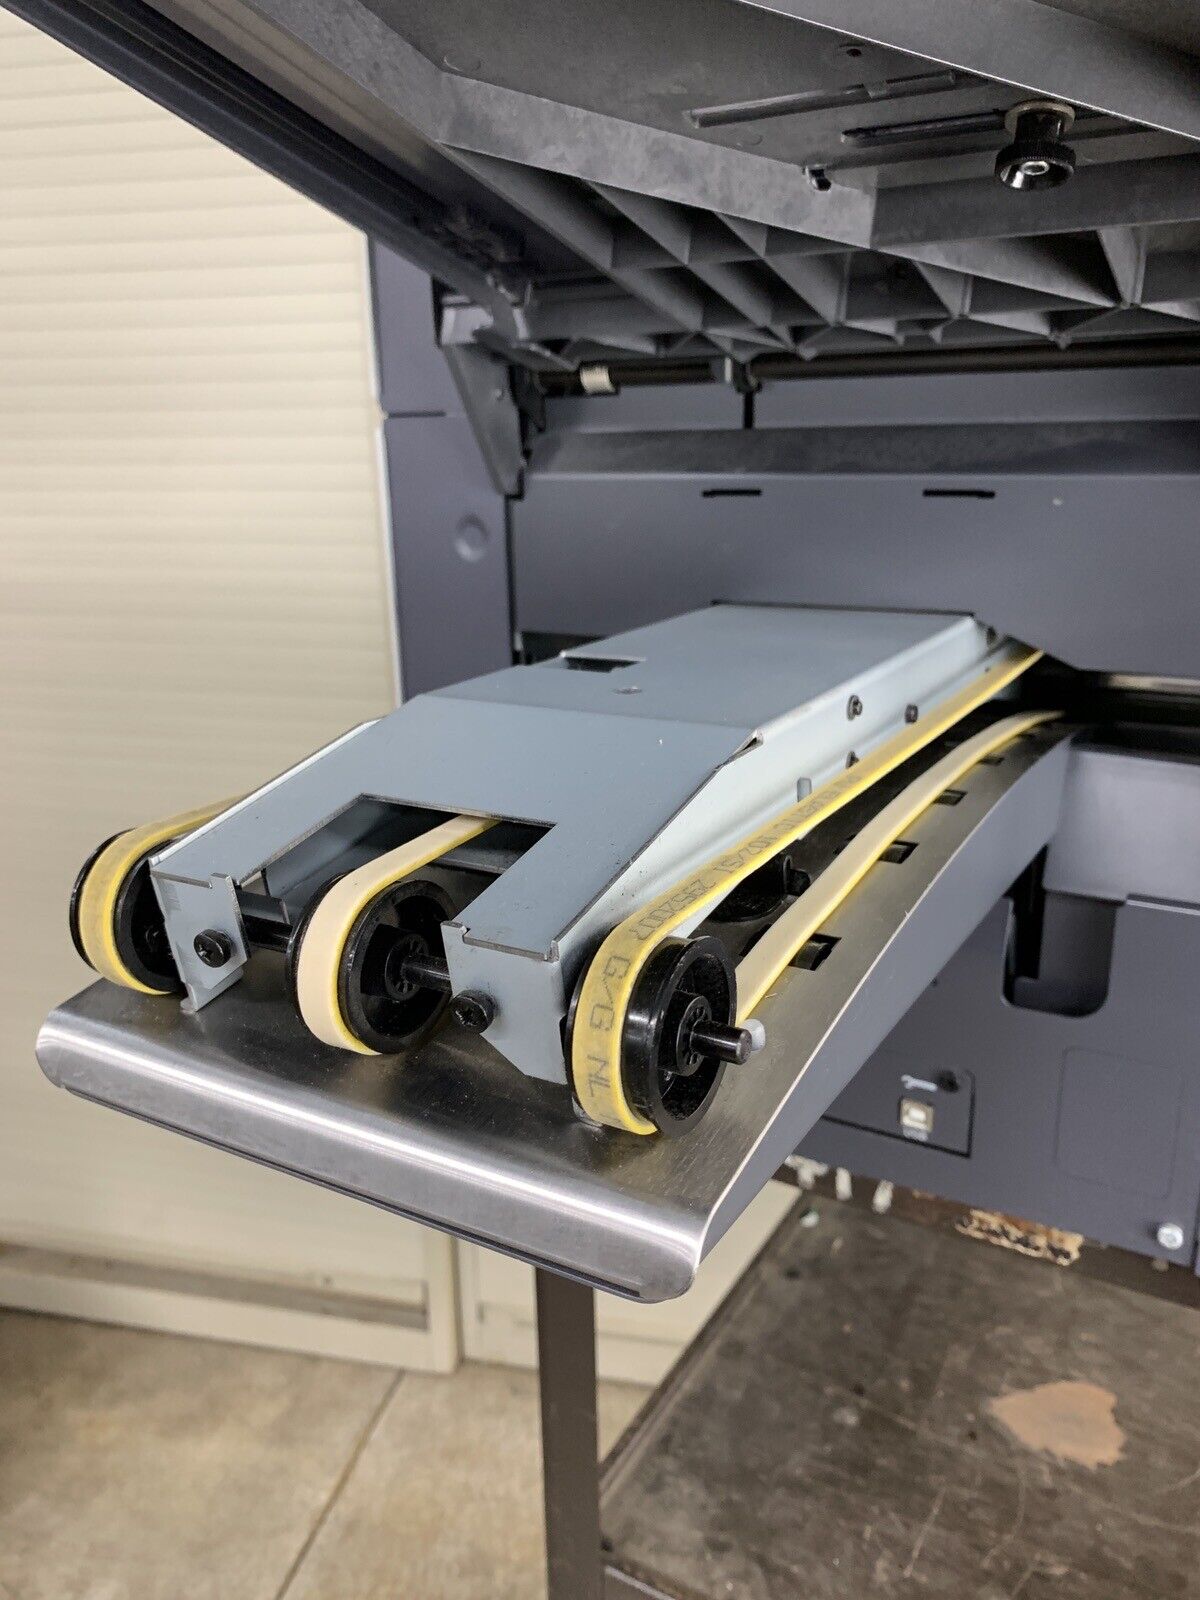 Neopost DS-63 Mailing Machine Envelope Stuffer  Folder Inserter Parts and Repair